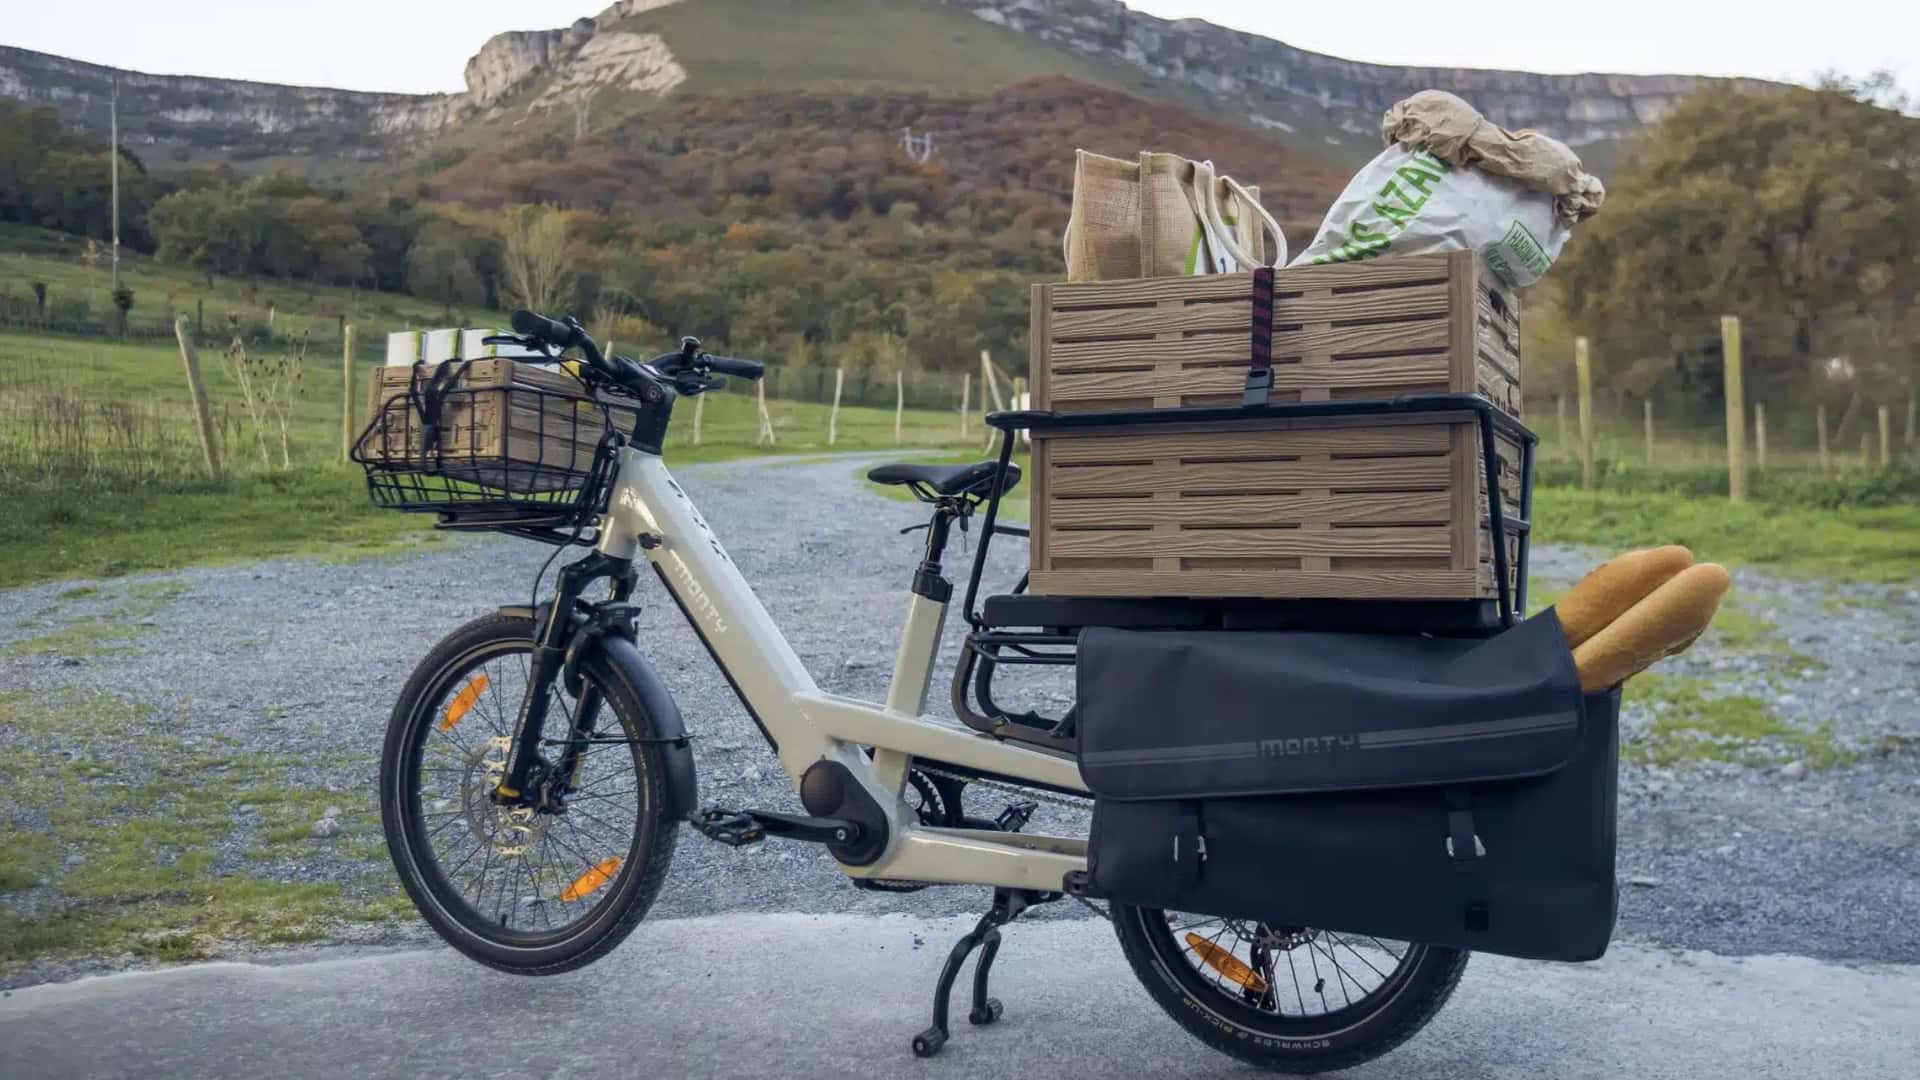 monty-v4-electric-cargo-bike